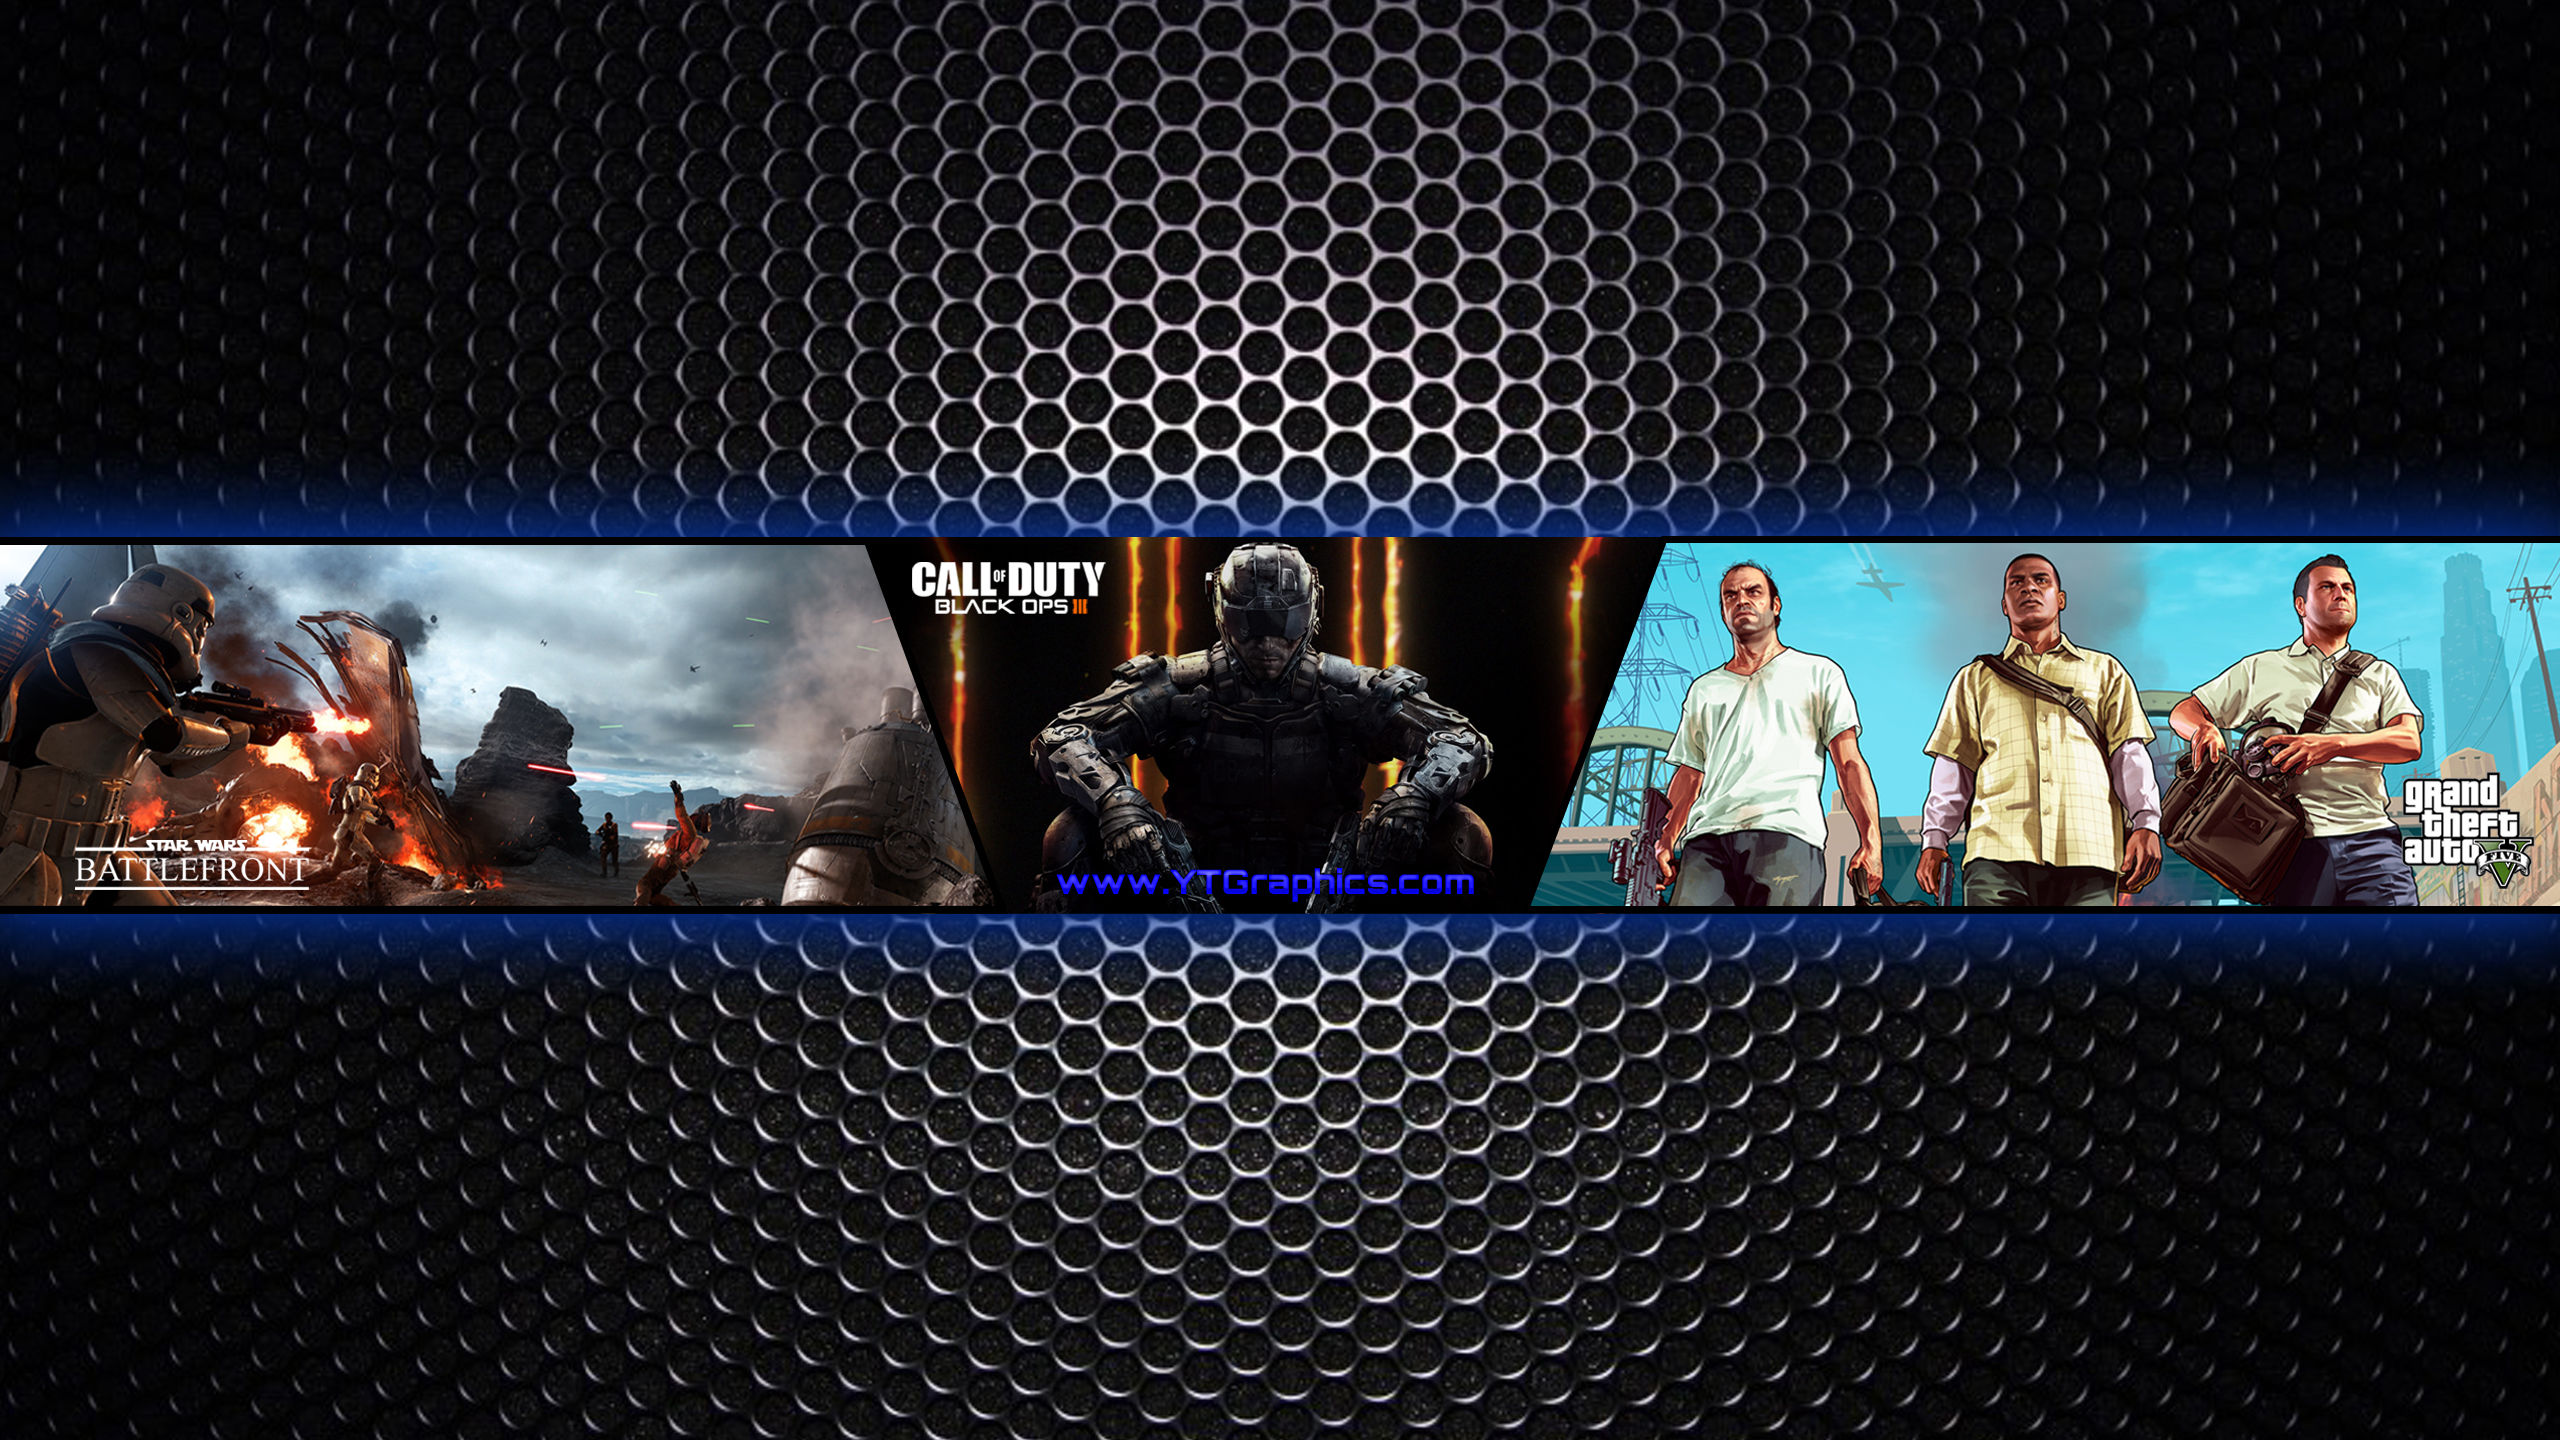 Mix: Battlefront, CoD: BO3, GTA V - YouTube Channel Art ... - 2560 x 1440 jpeg 637kB